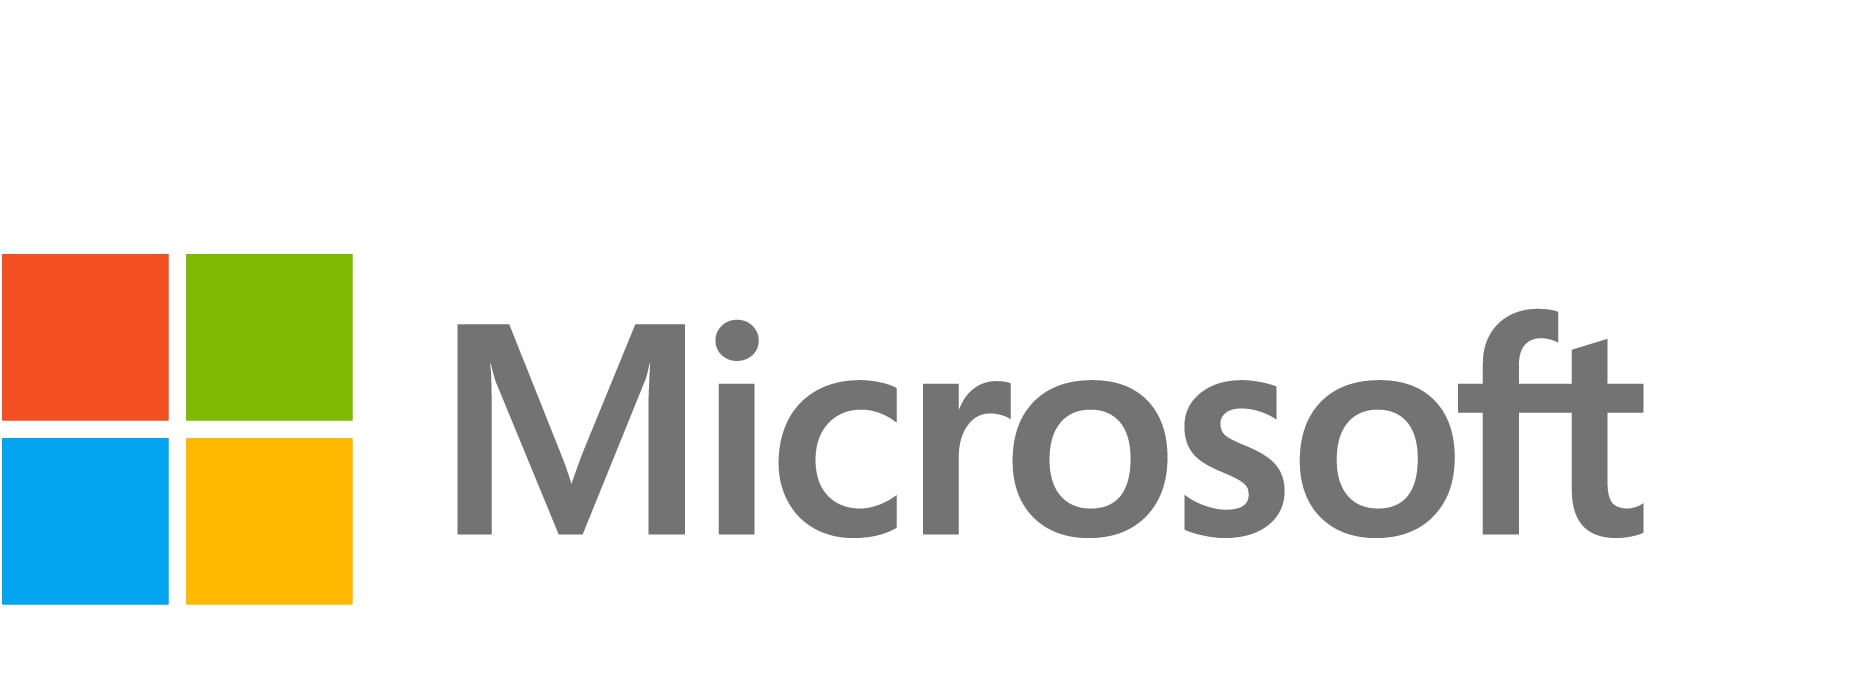 Microsoft BizTalk Server Standard Edition - license & software assurance -